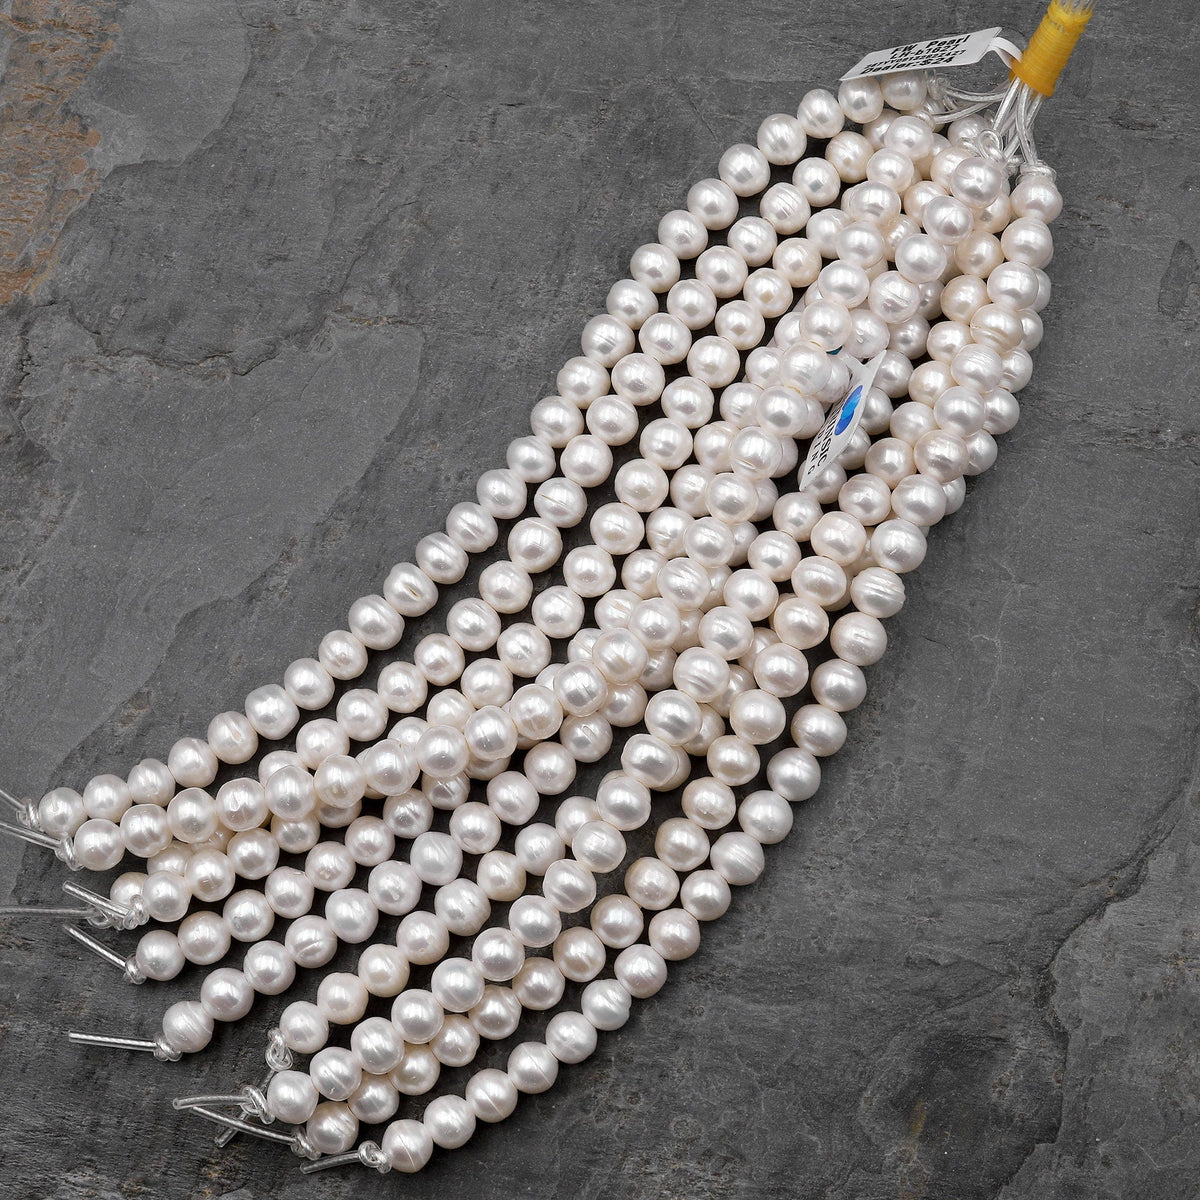 8-9mm Natural Freshwater Pearl Beads, Genuine Freshwater Pearls